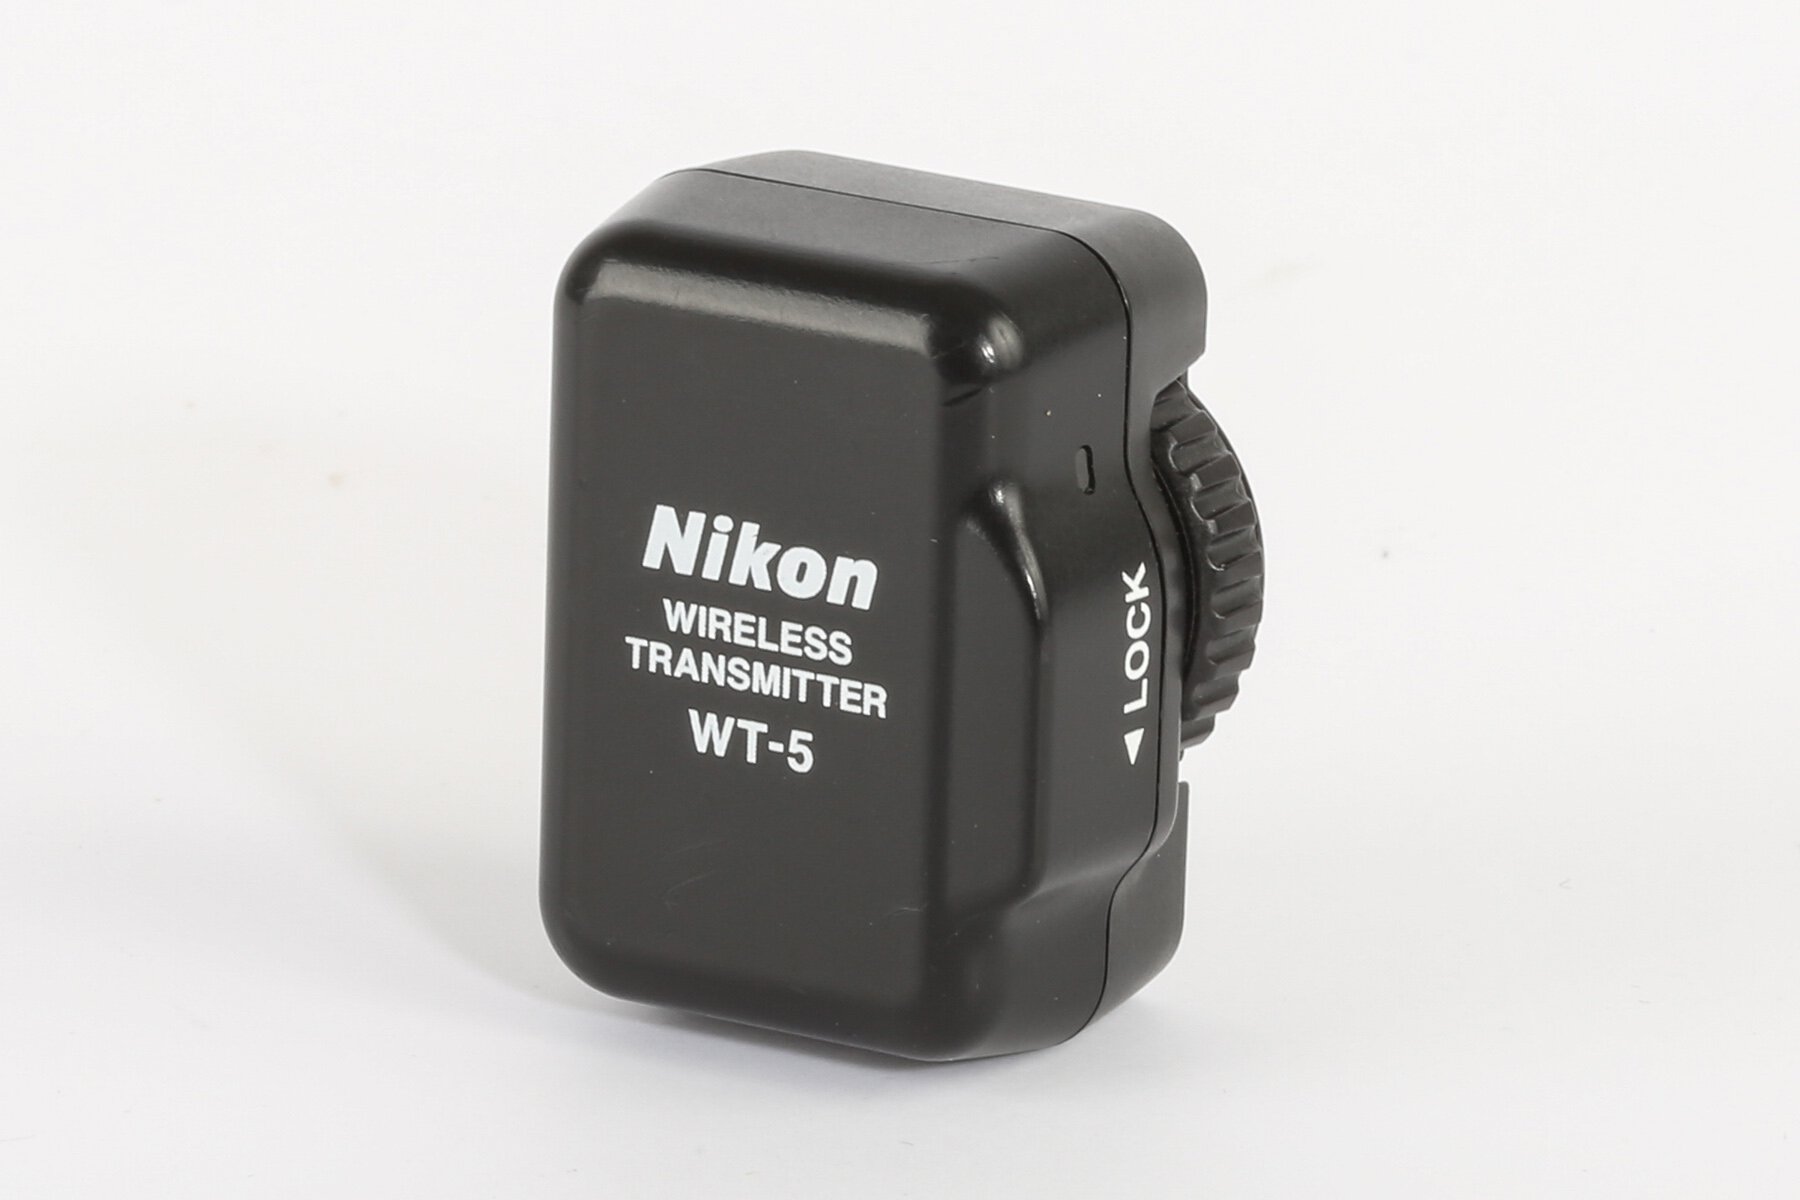 Nikon Wireless Transmitter WT-5